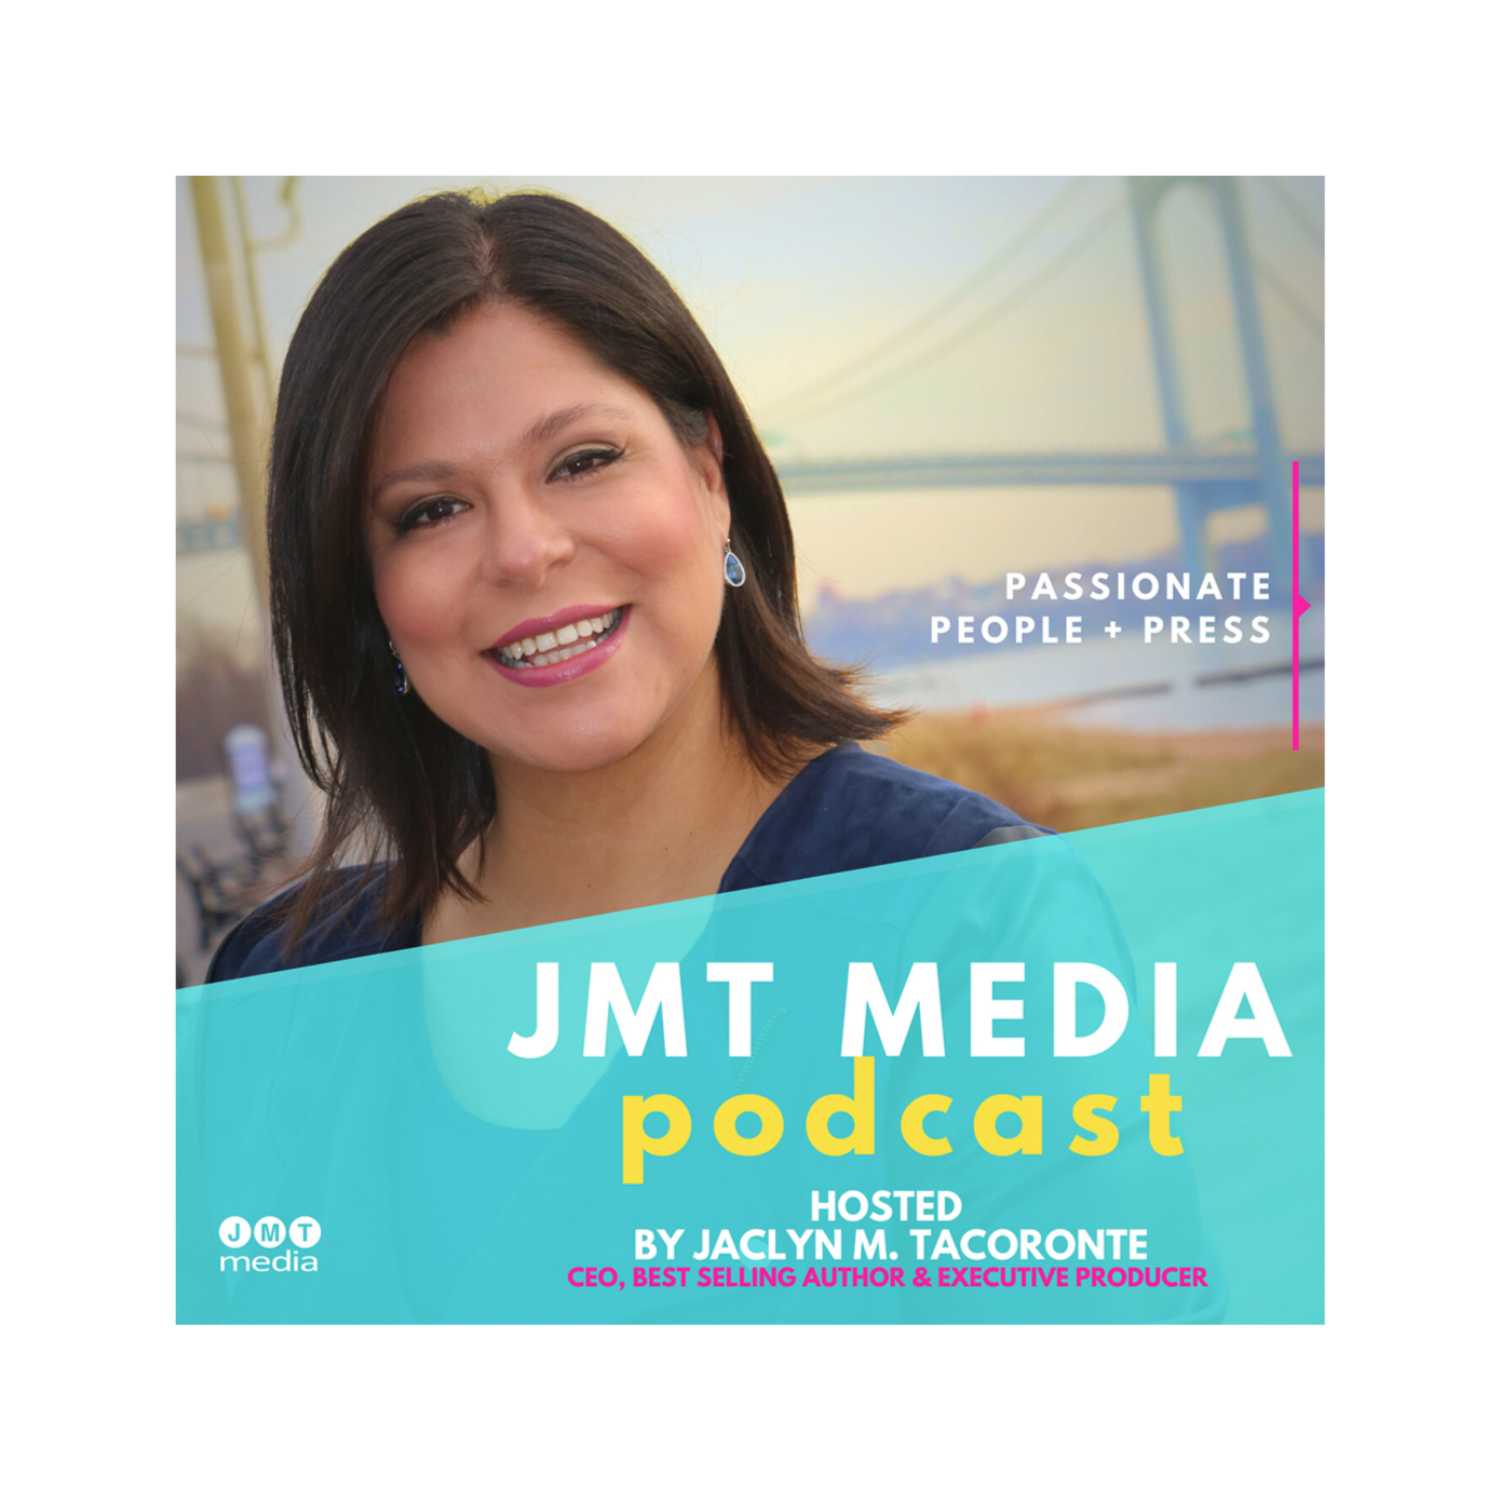 JMT Media Podcast | Season 3 Episode 4 With Tricia Shevack